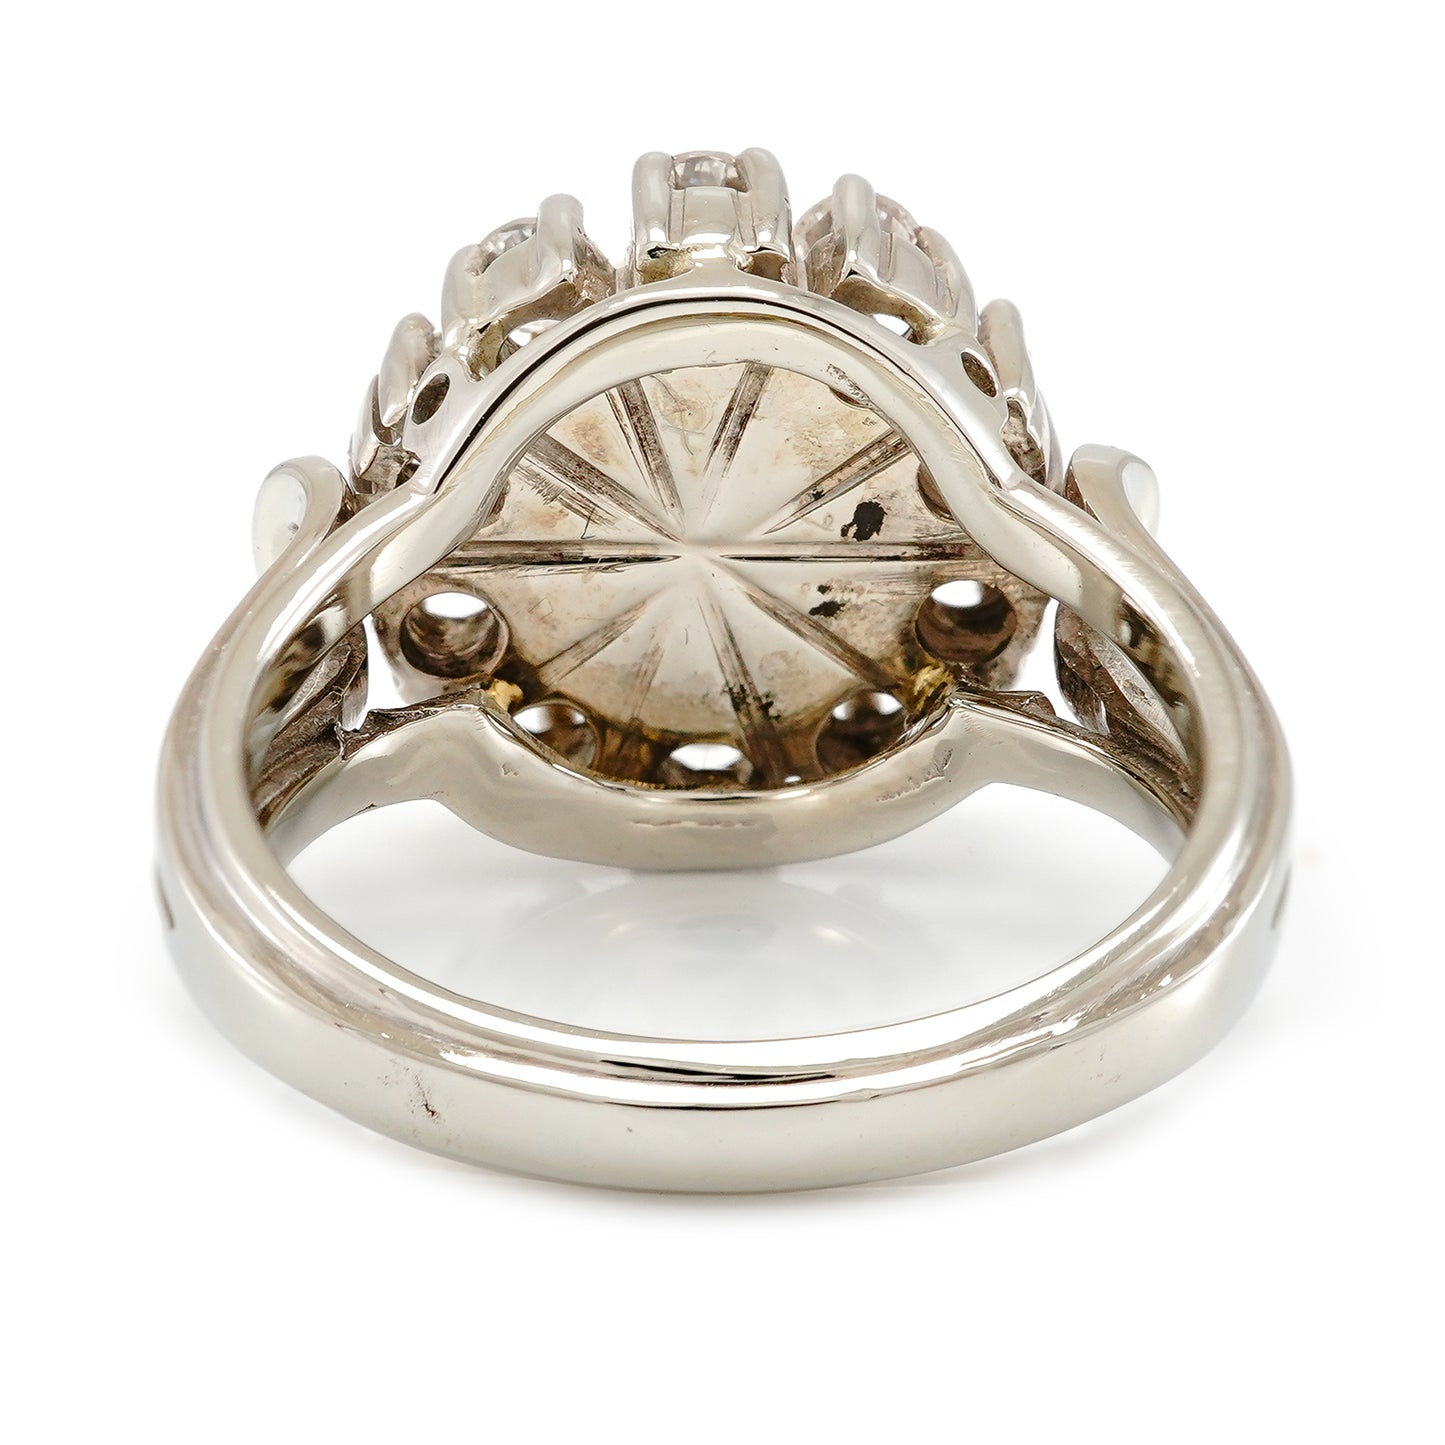 Vintage diamond ring pearl white gold 14K women's jewelry set gold ring diamond ring